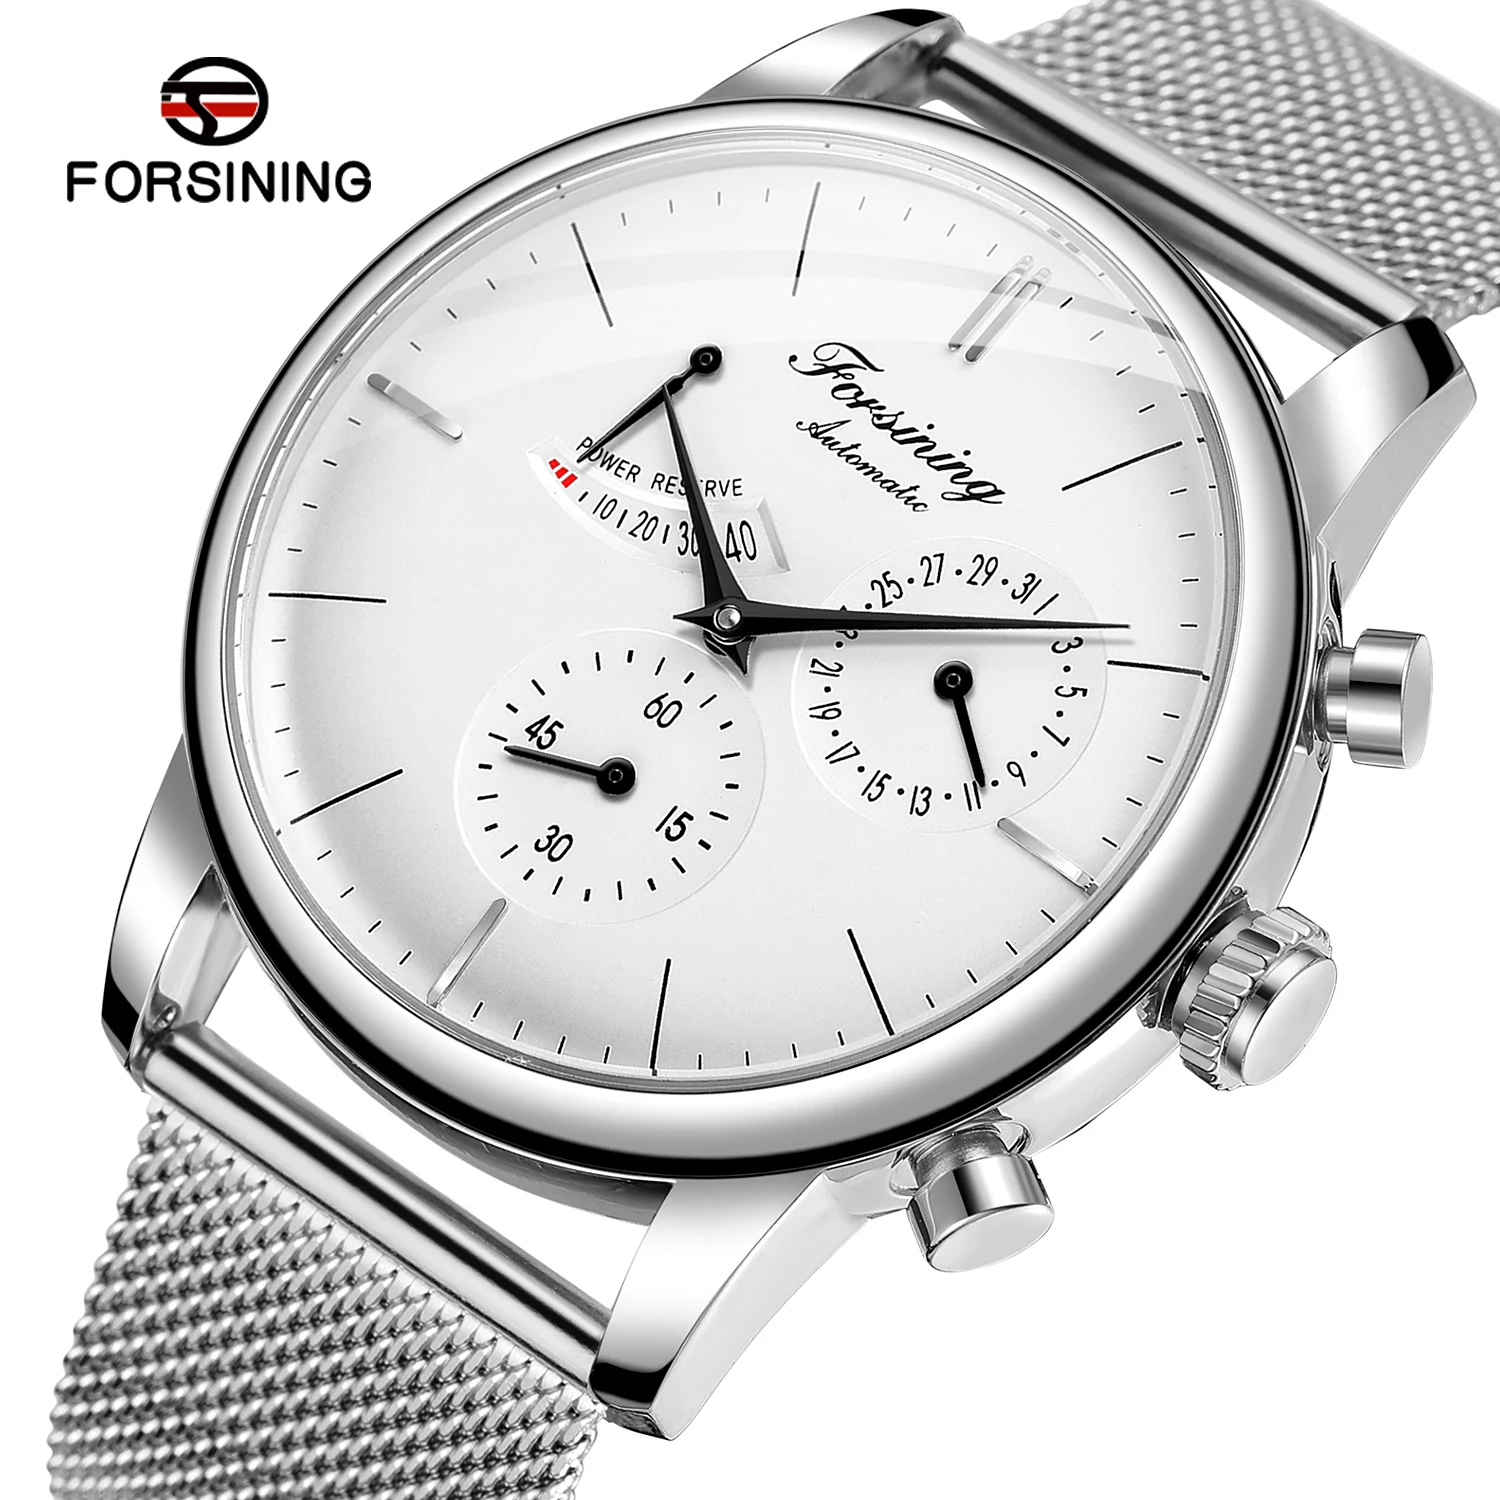 Forsining Power Reserve Design Automatic Mechanical Watch White Dial Mesh Belt Waterproof Luminous Hand Date Clock Box Free Ship